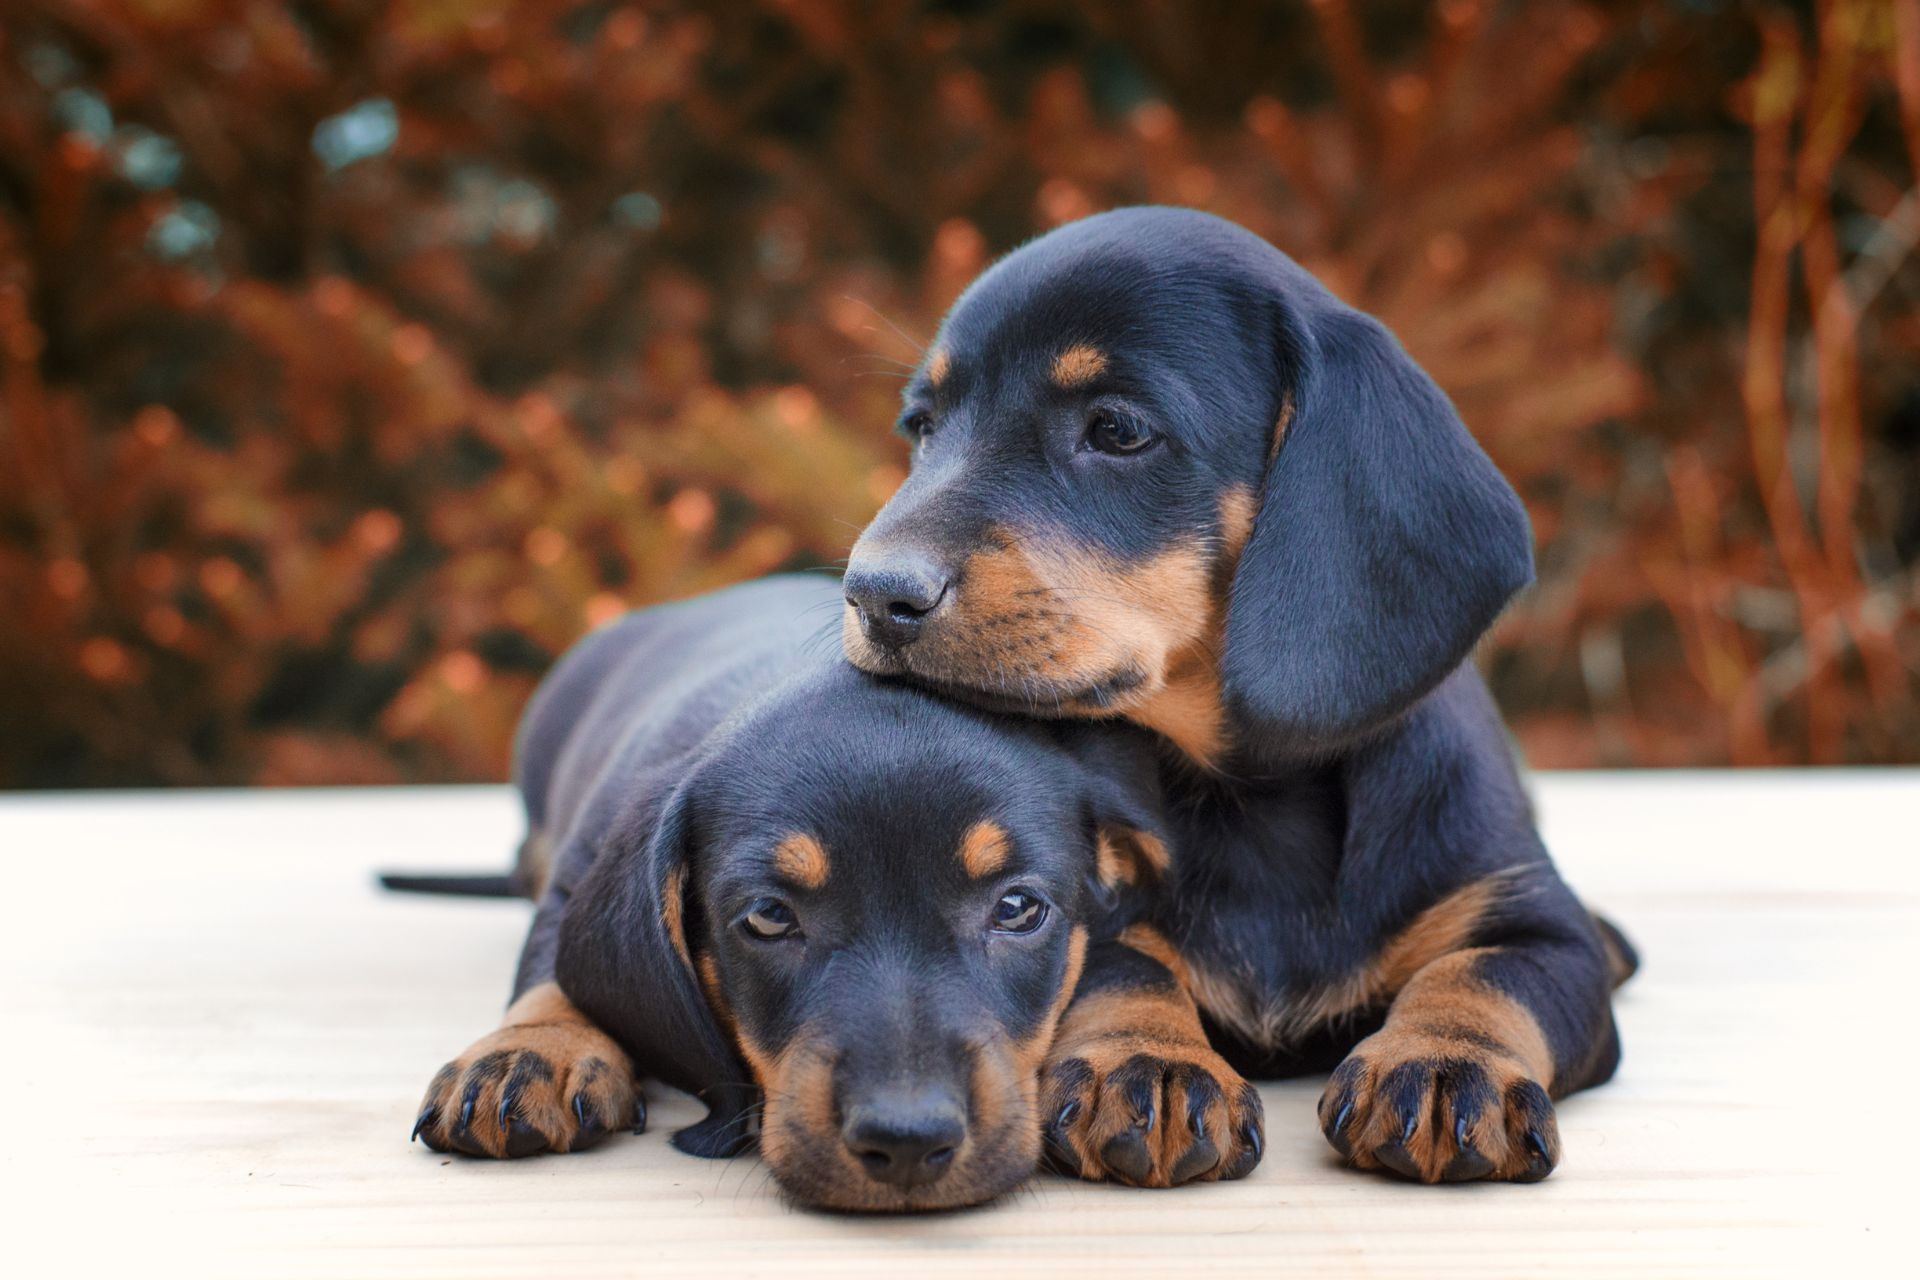 dachshund puppies being together